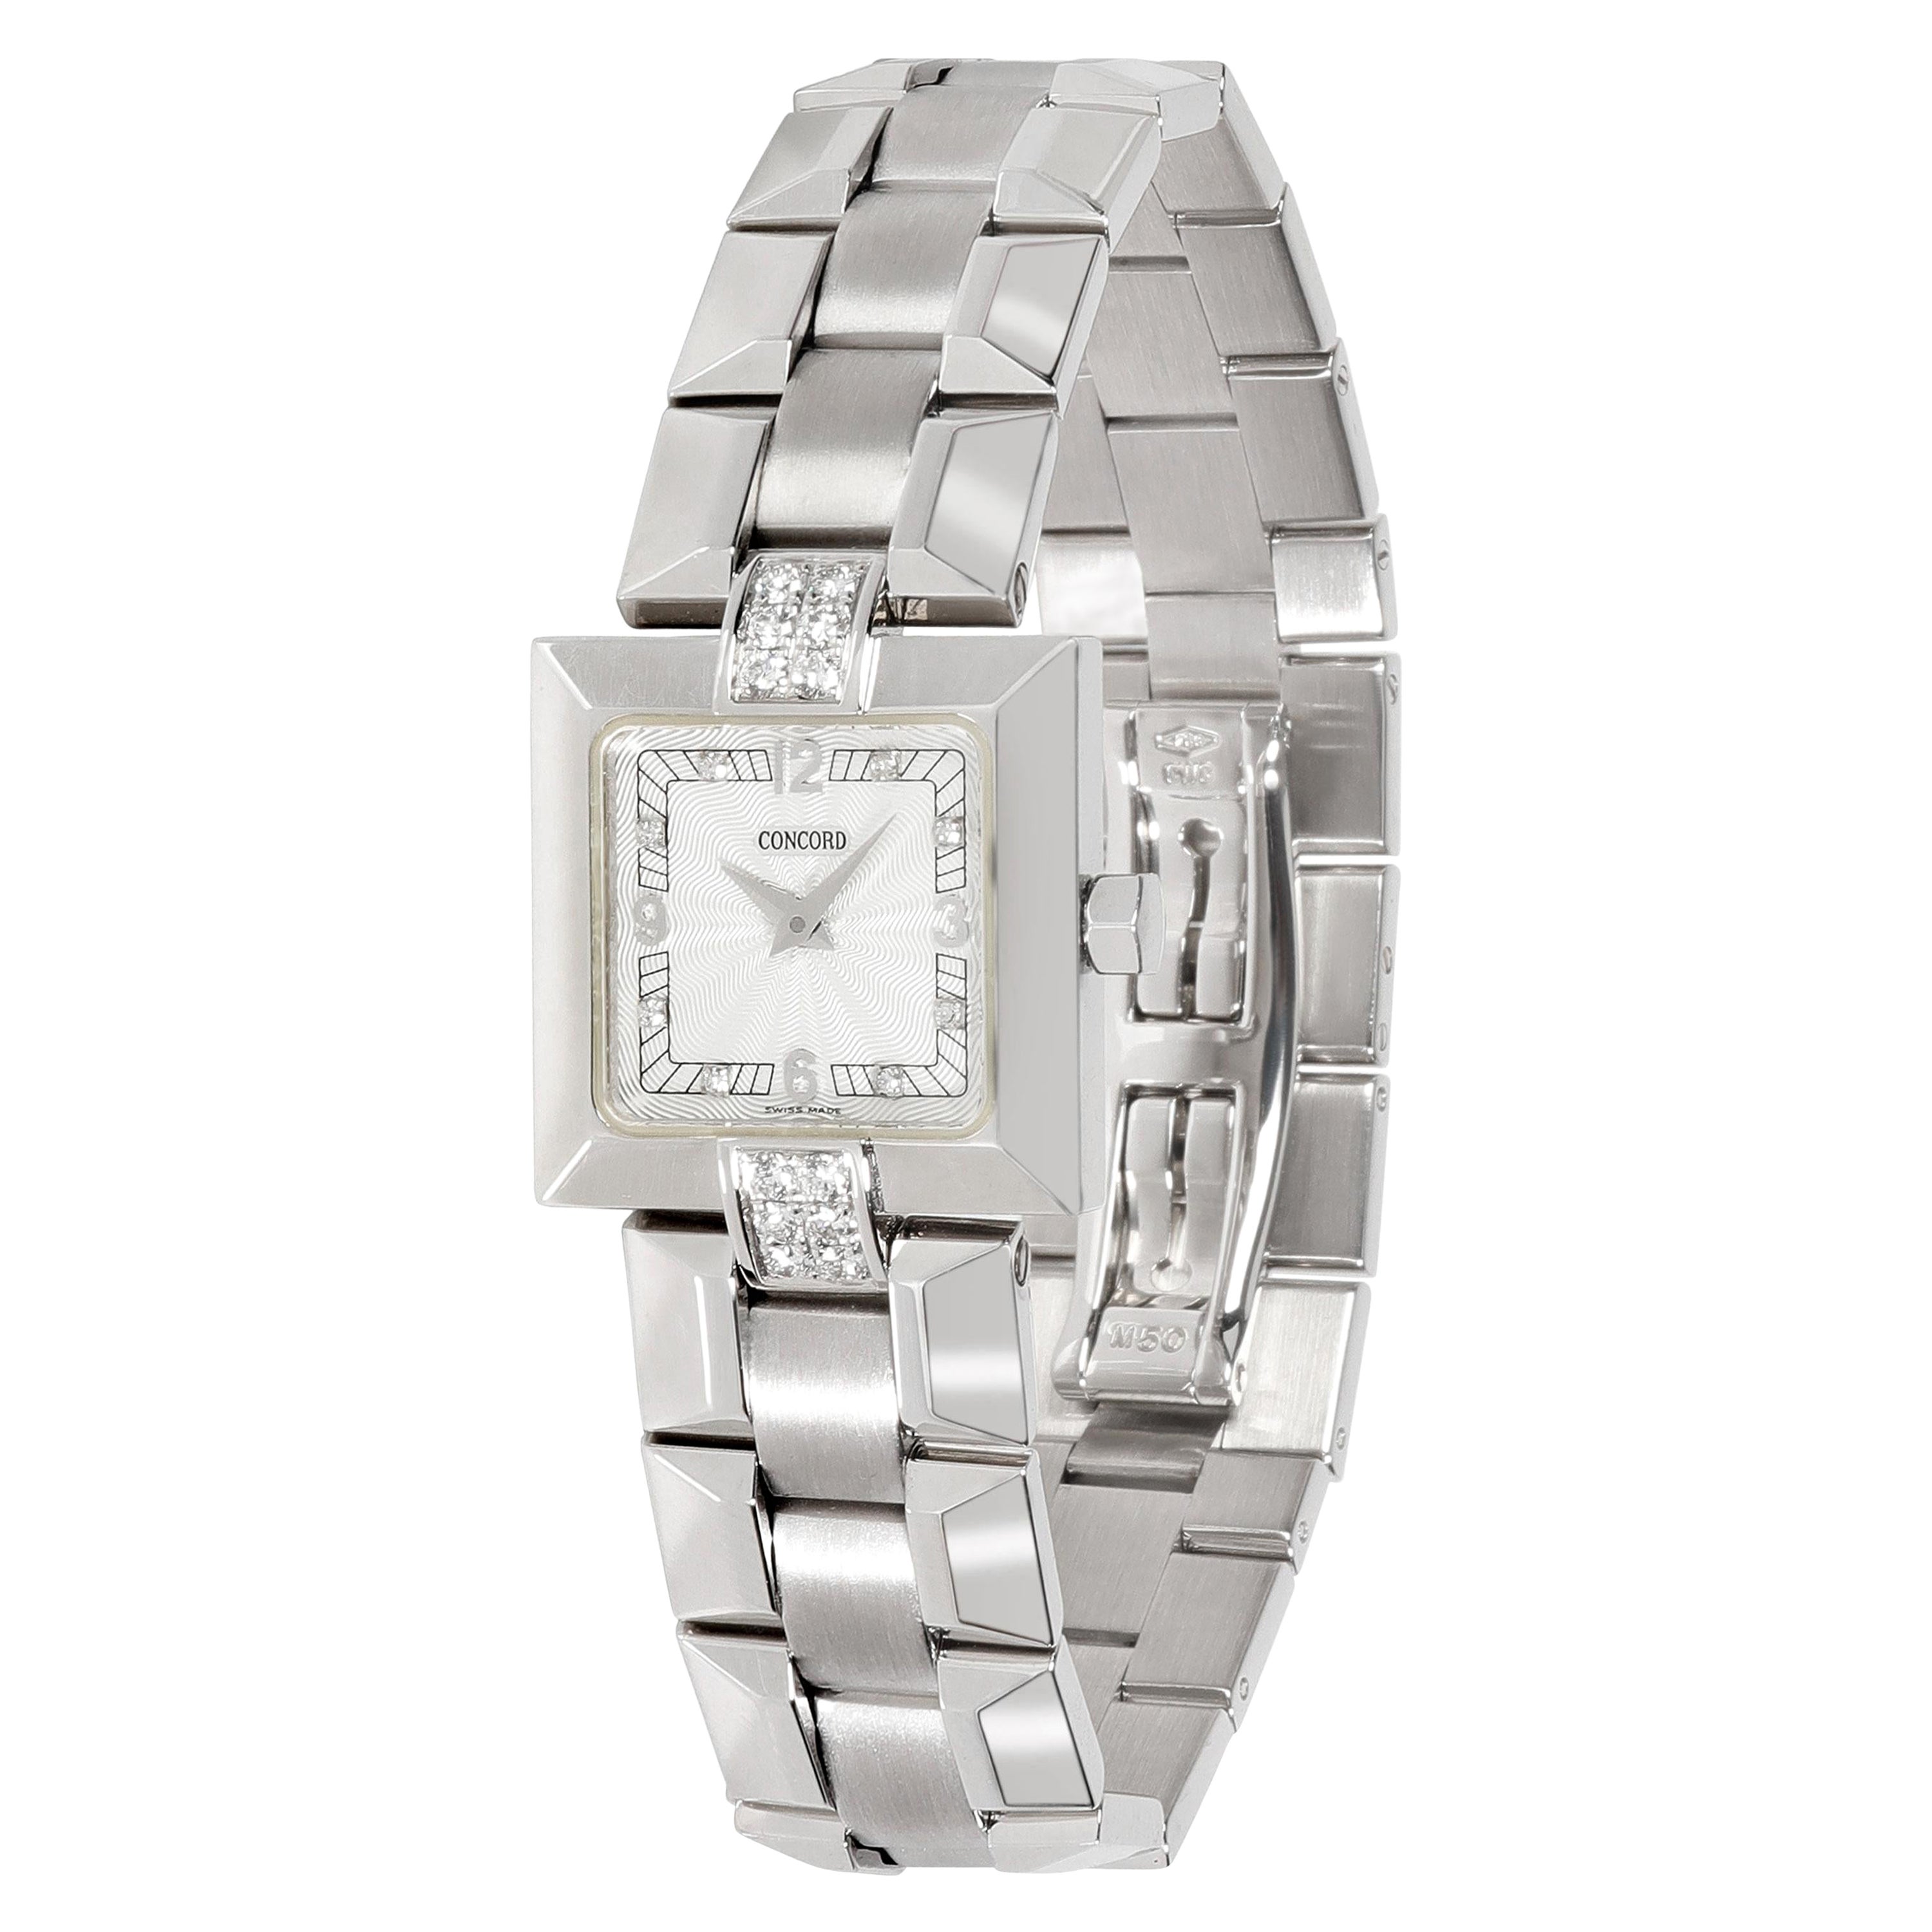 Concord La Scala 0308184 Women's Watch in 18kt White Gold